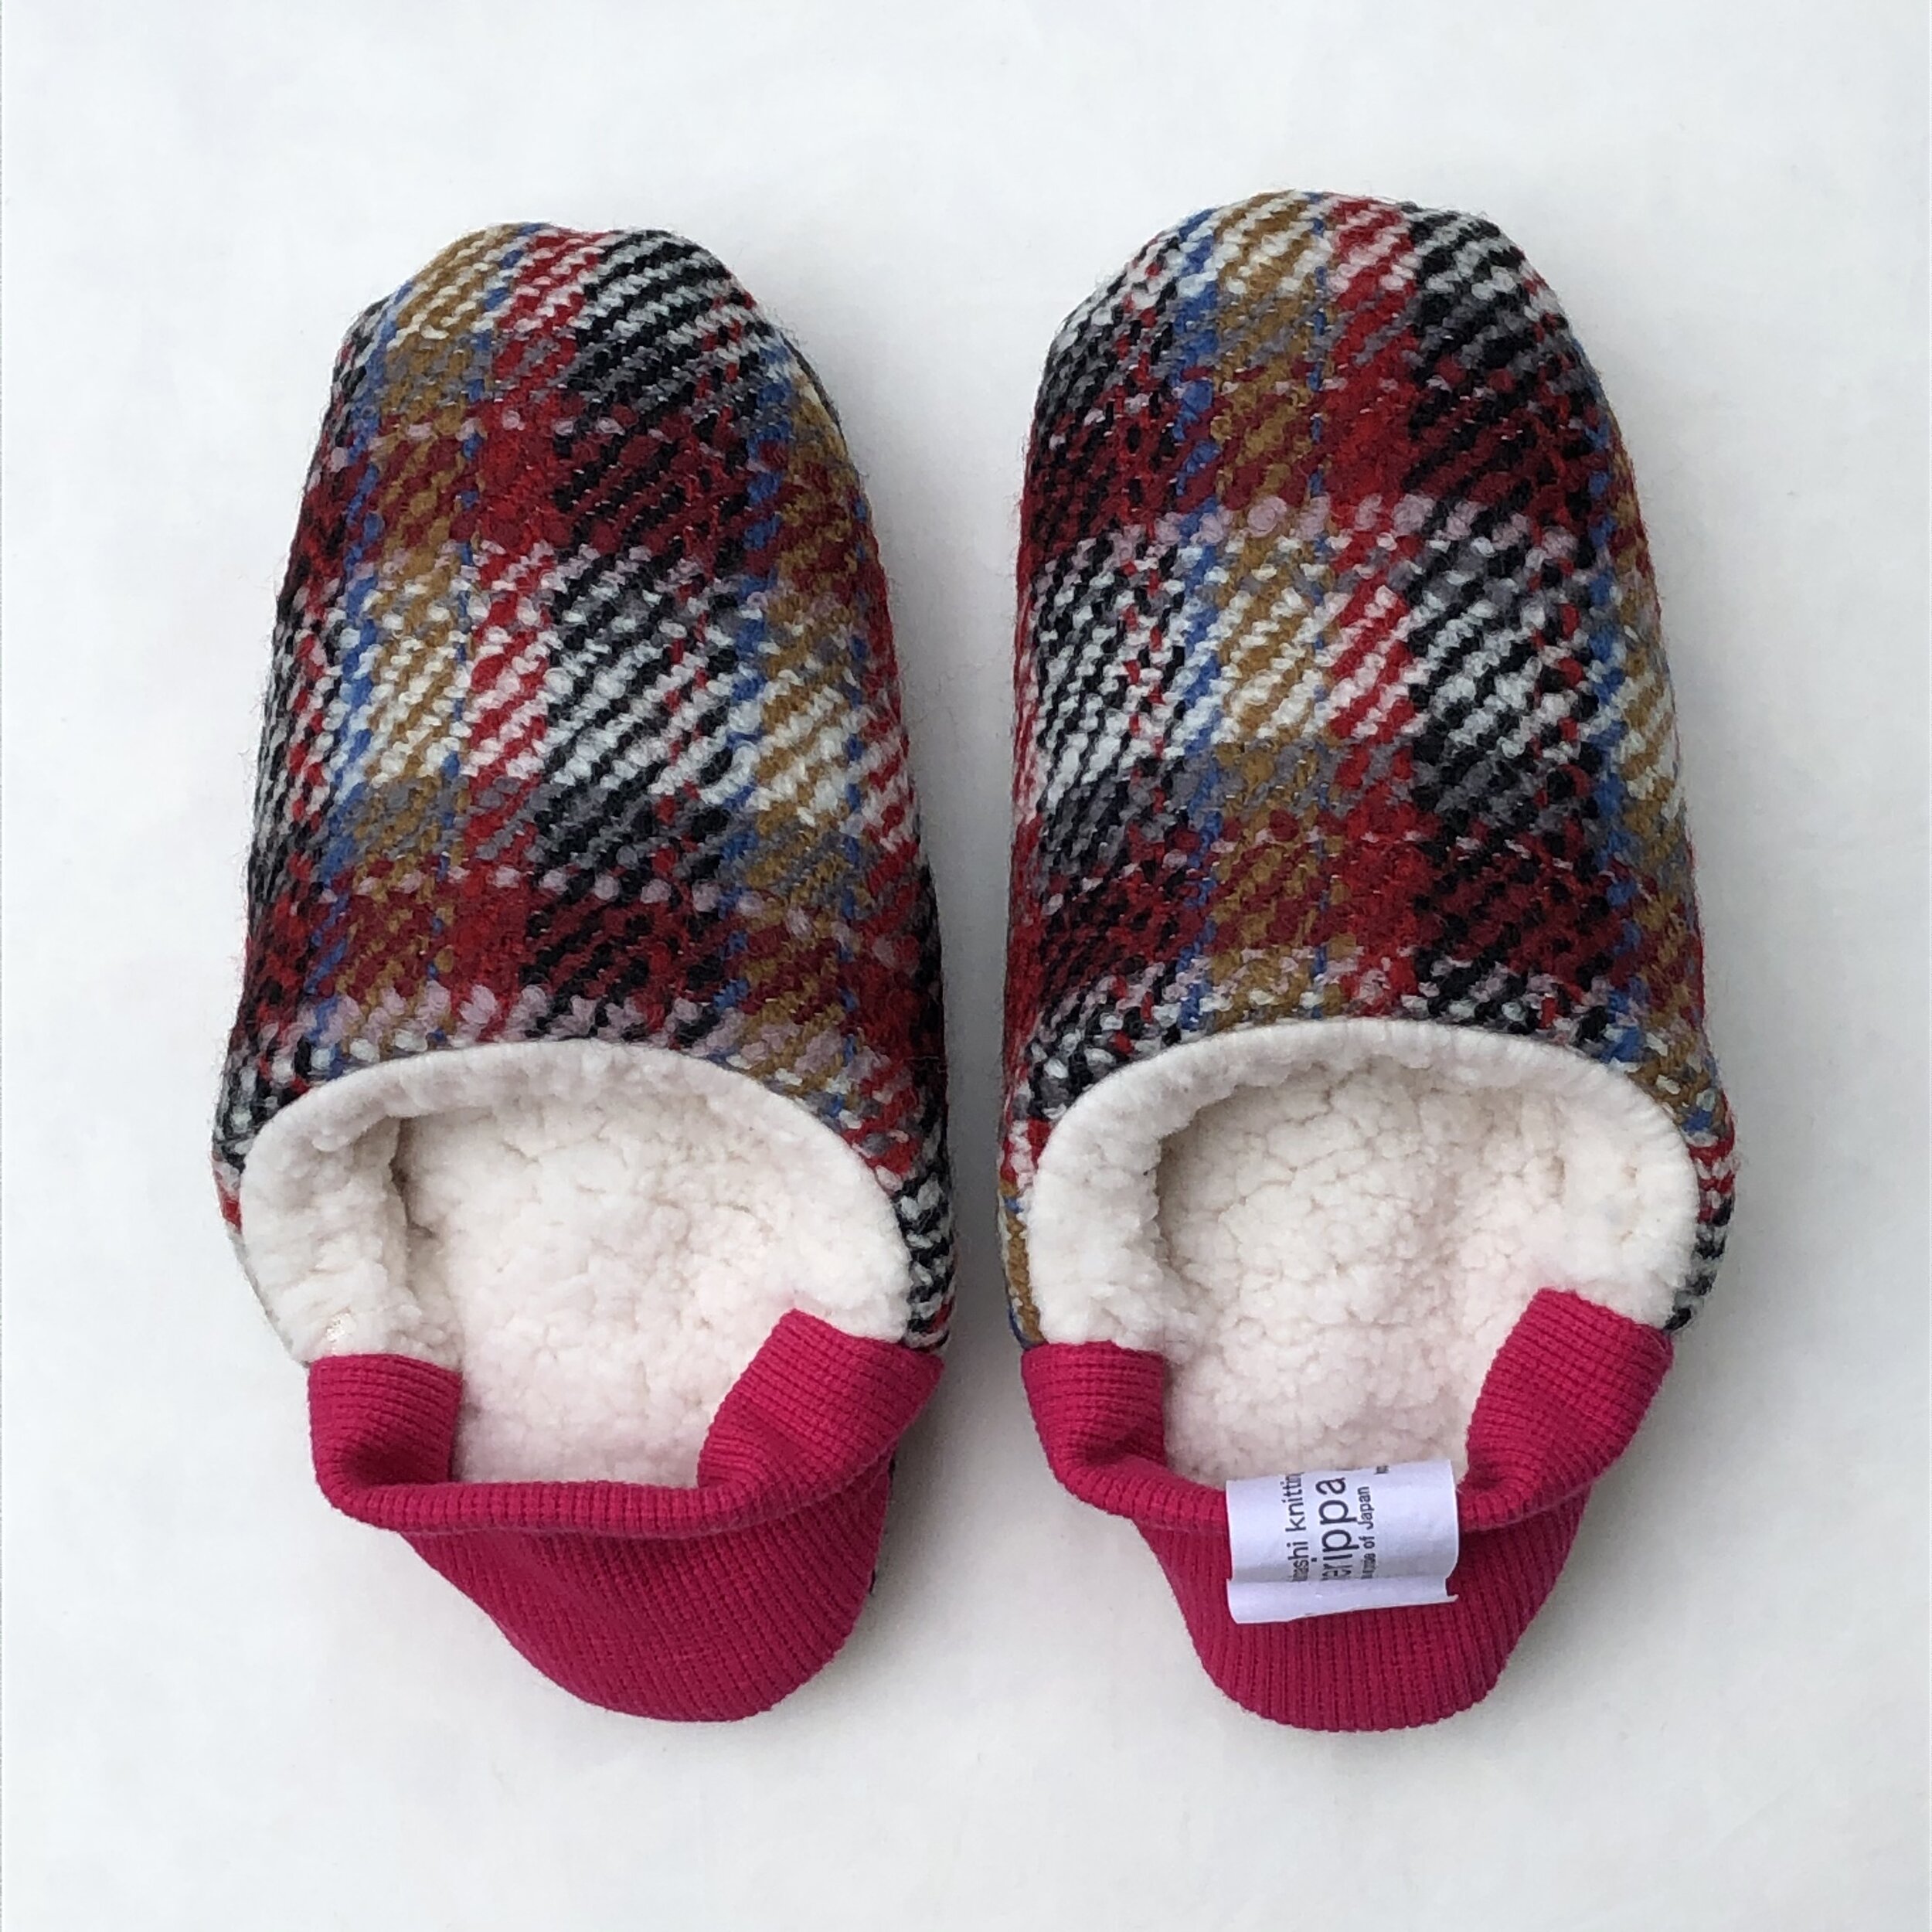 merippa slippers